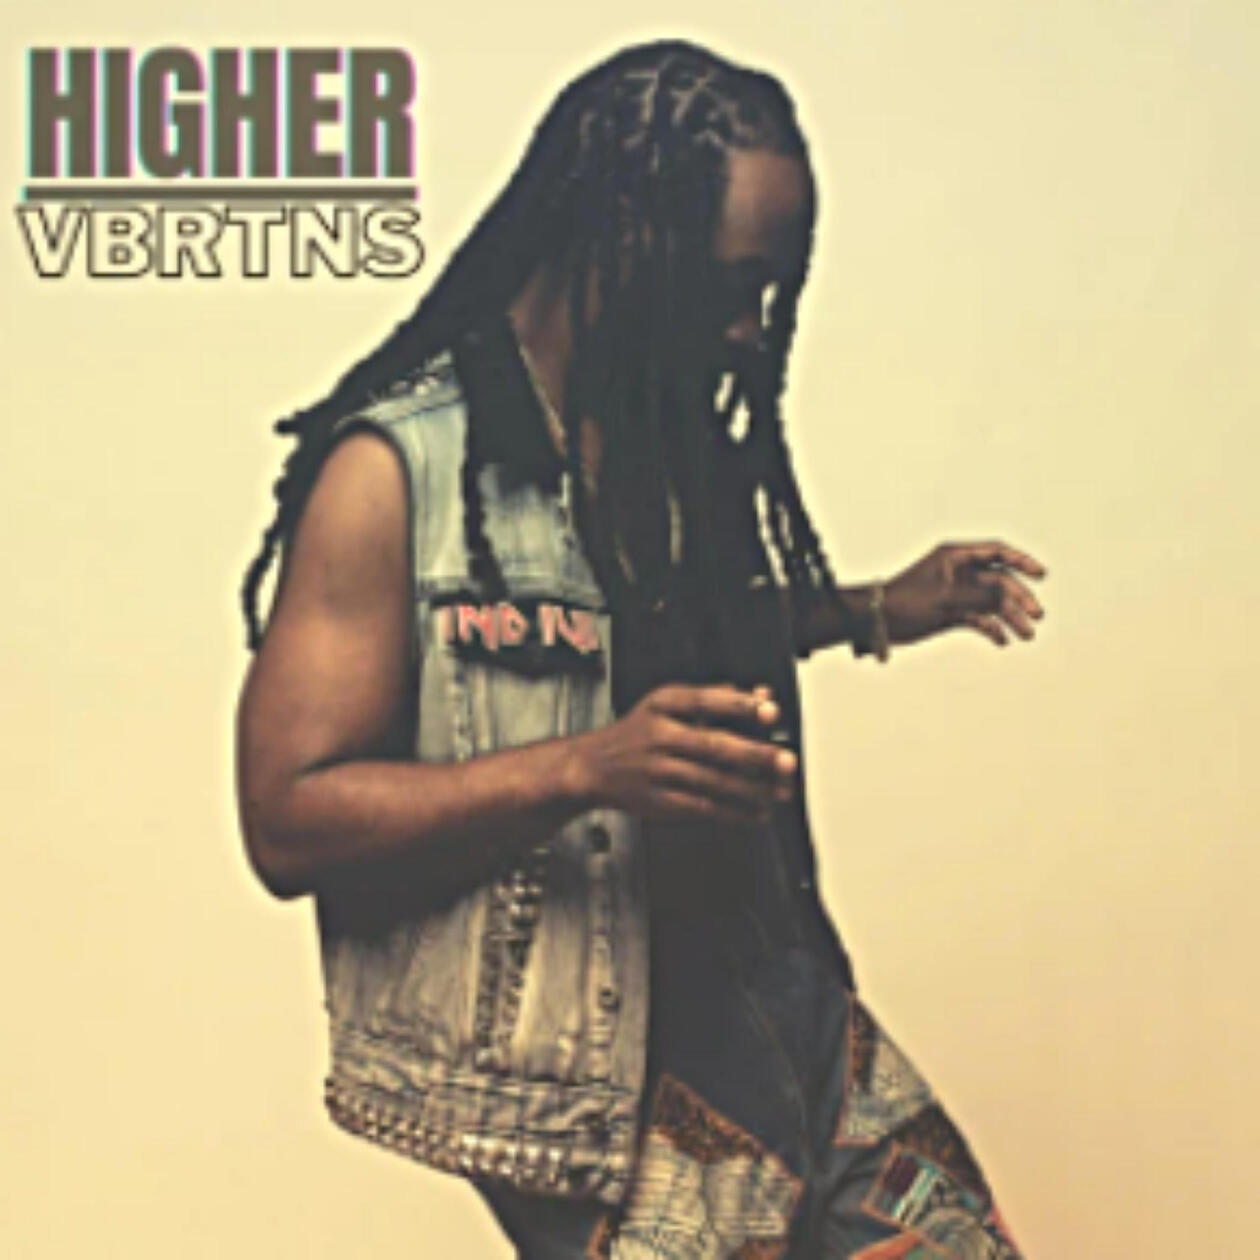 VBRTNS - Highers